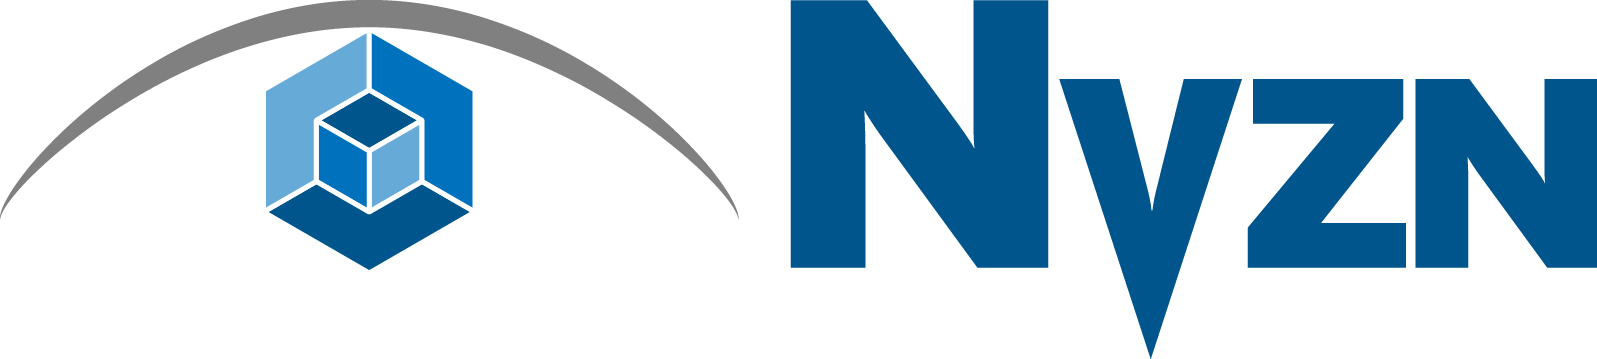 Nvzn Augmented Reality Corp. Horizontal Logo